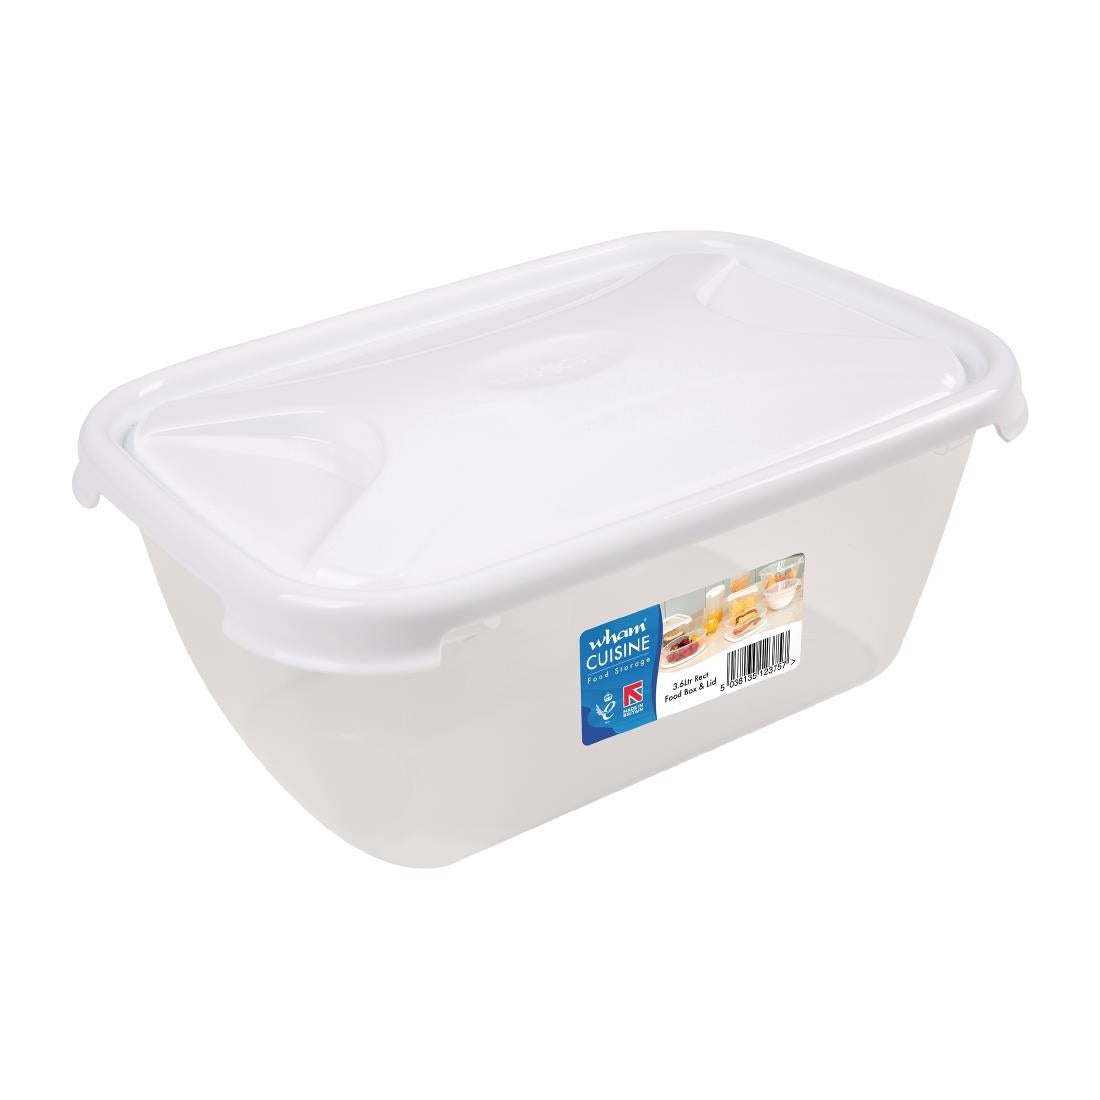 FS454 Wham Cuisine Polypropylene Rectangular Food Storage Box Container 3.6ltr JD Catering Equipment Solutions Ltd